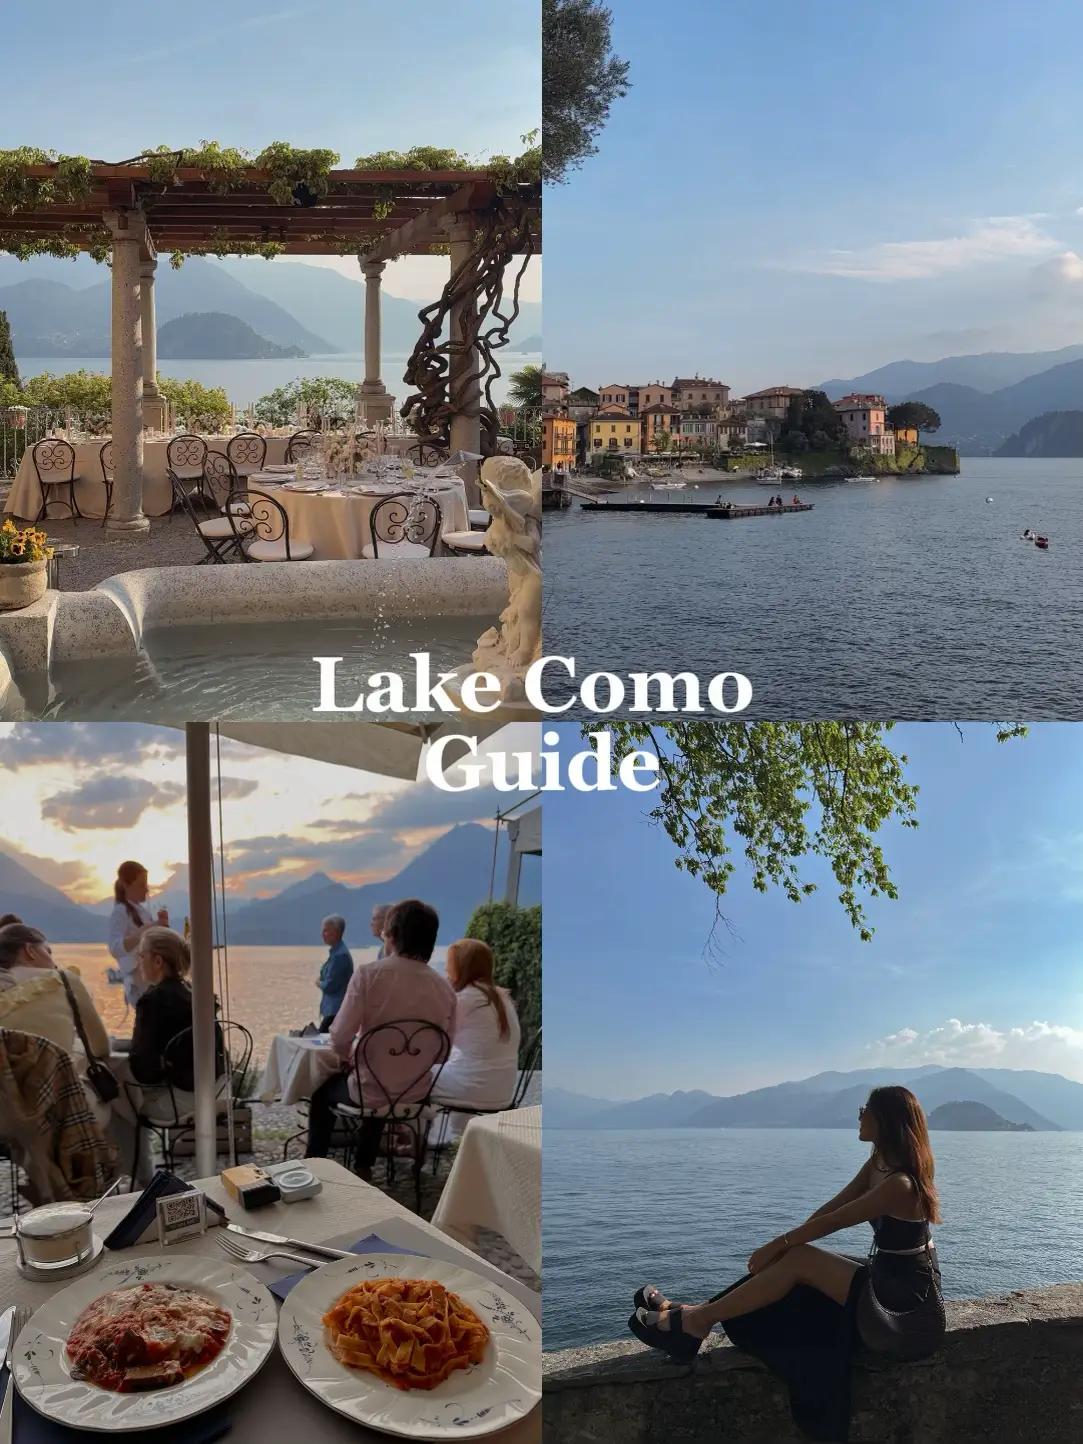 Hotel Deals in Lake Como - Lemon8 Search